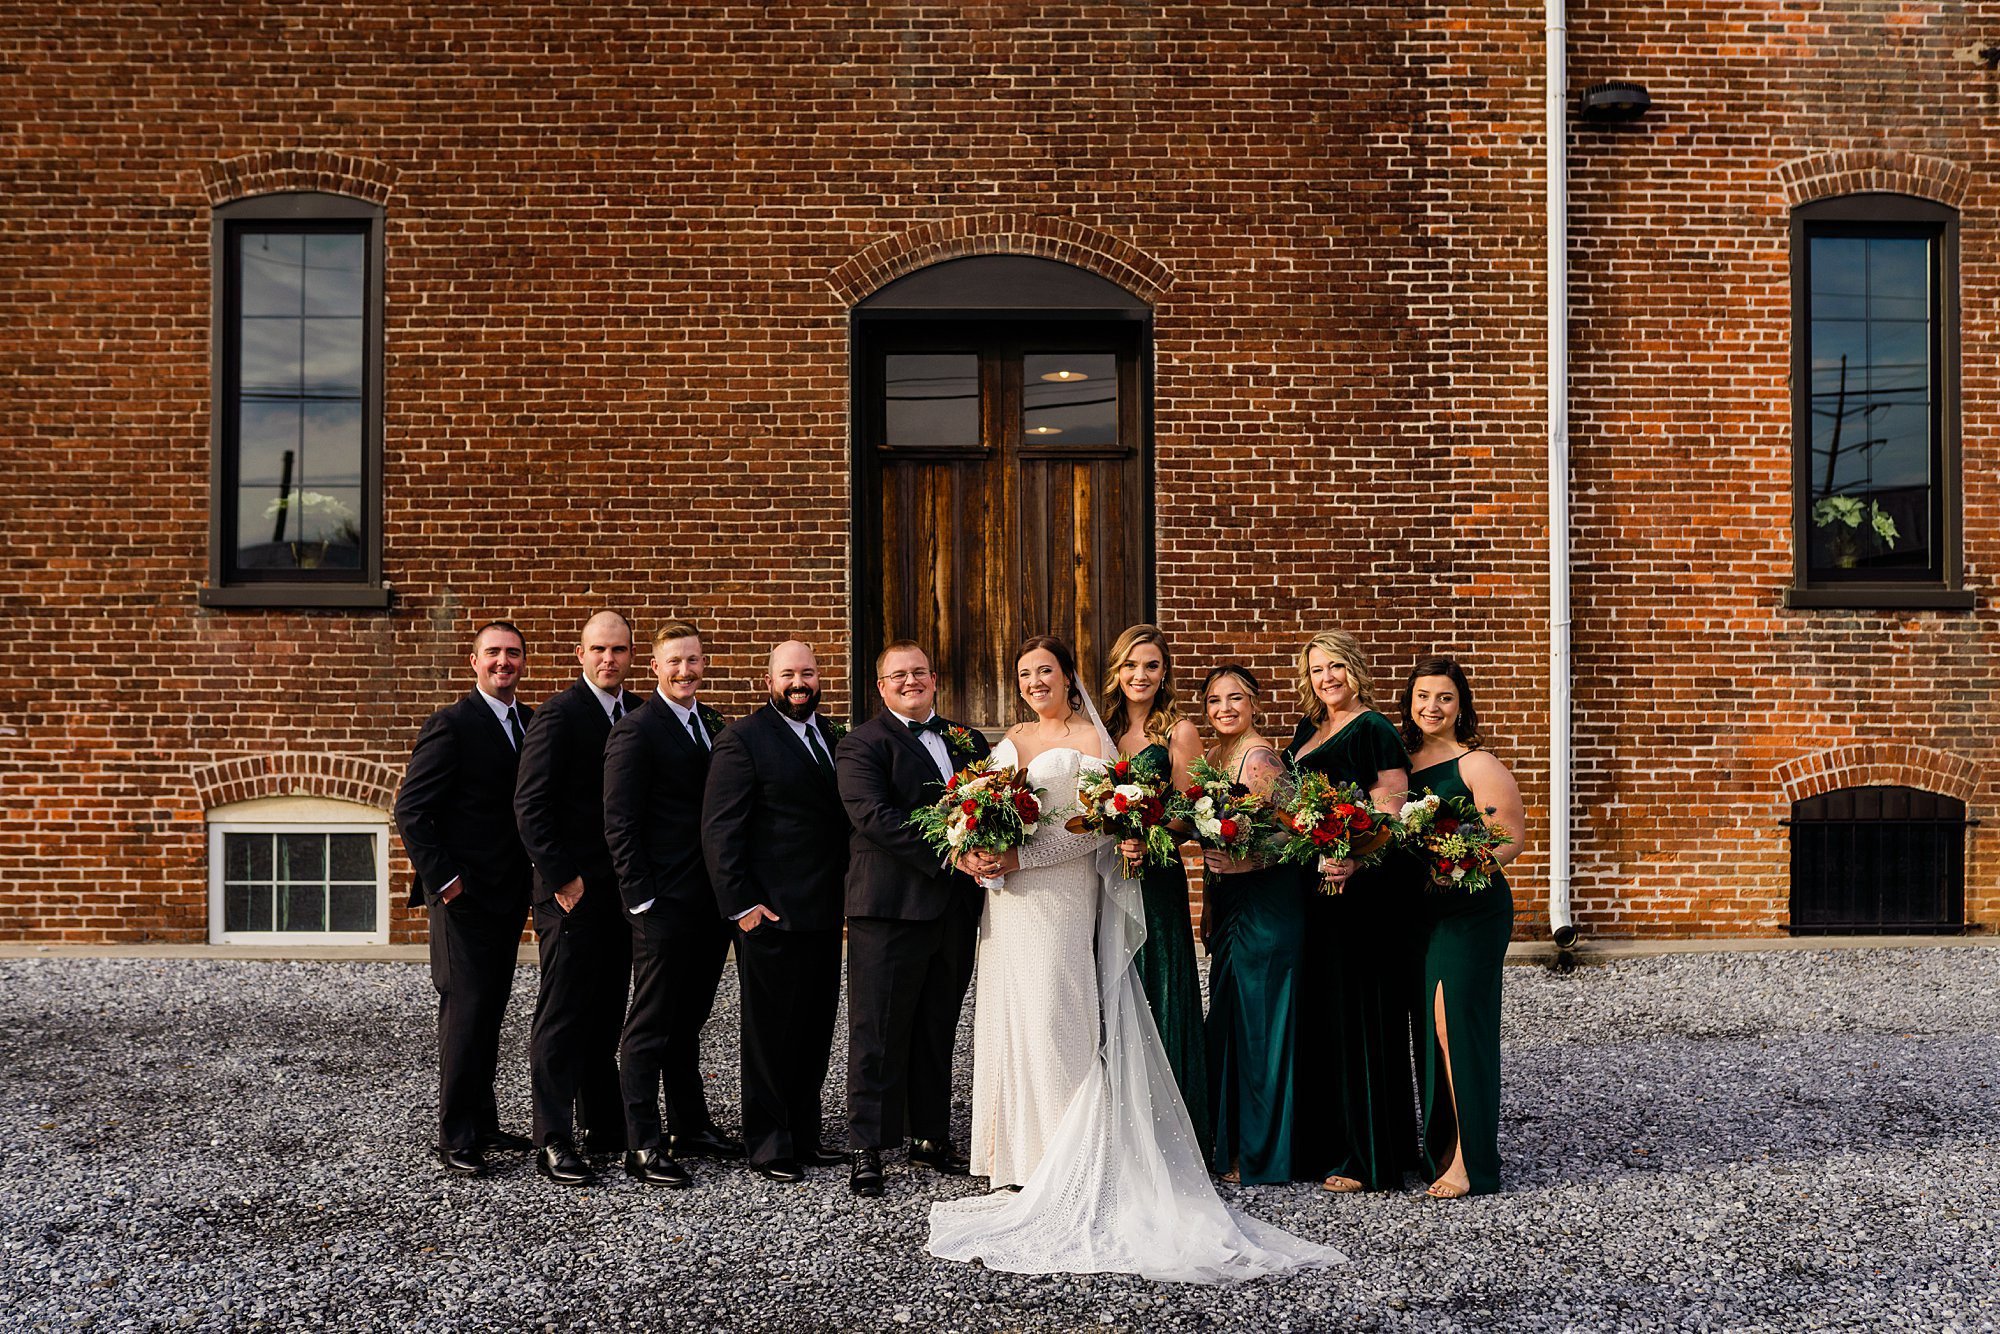 Emily Grace Photo, The Booking House Manheim Wedding, The Booking House Manheim Winter Wedding, Manheim PA Wedding Venue